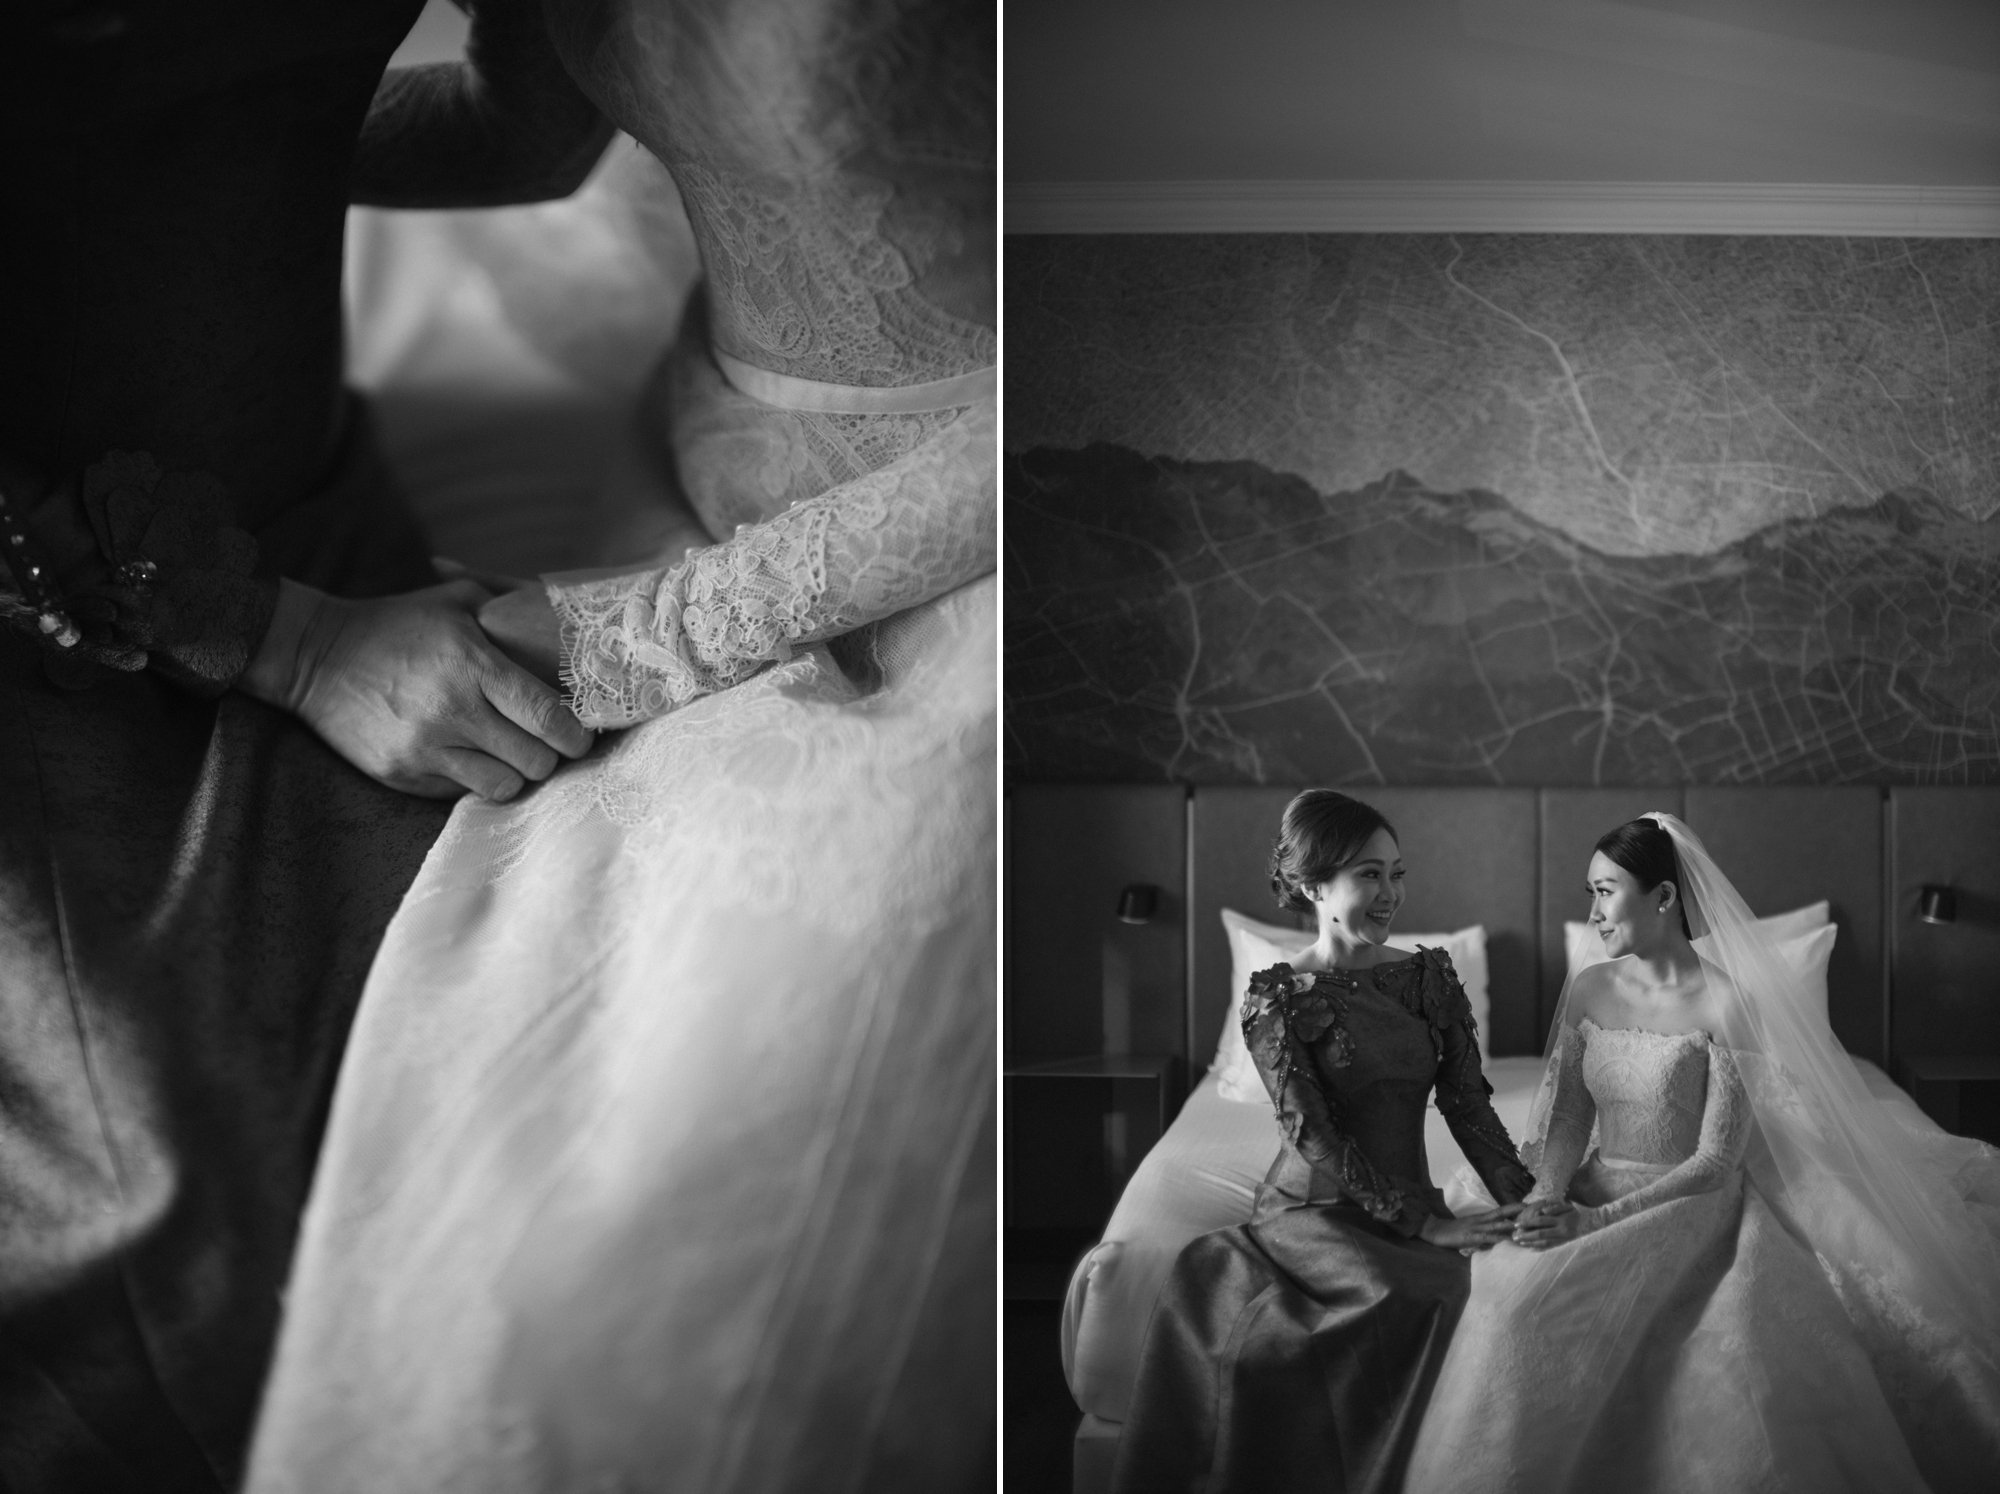 Prawira-Evelyn-Dolomites-Italy-Santre wedding-Yefta Gunawan-Jeriko MUA-Carol Kuntjoro Photography-34.jpg